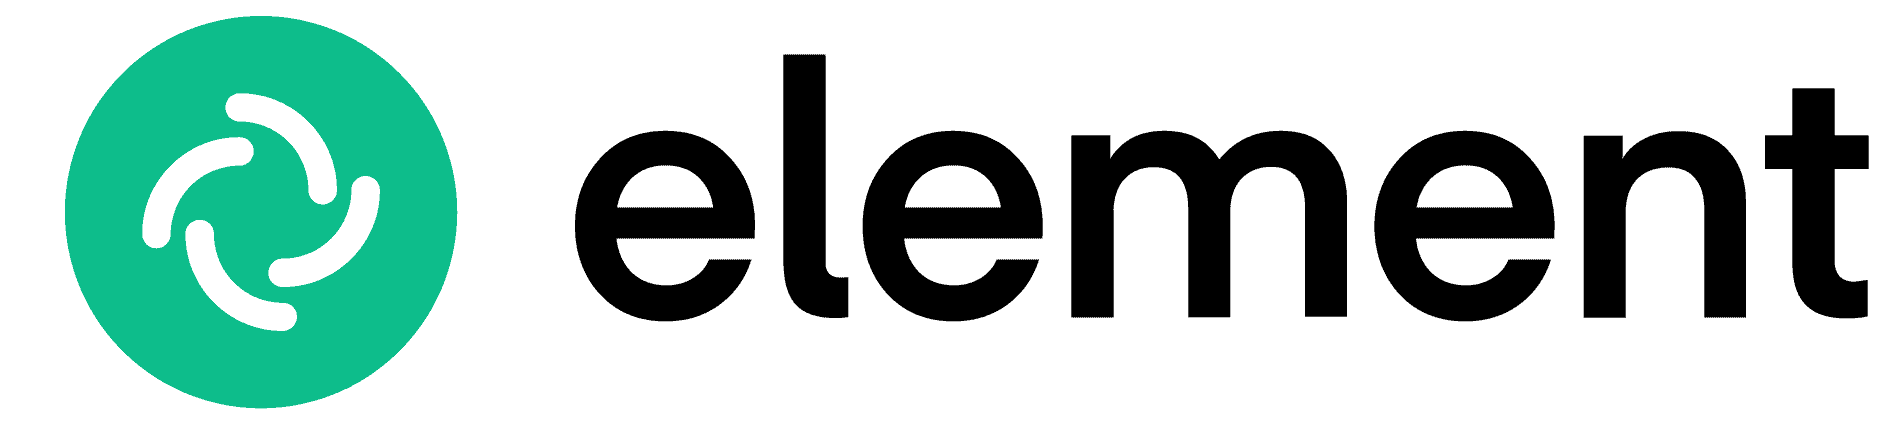 Element Logo